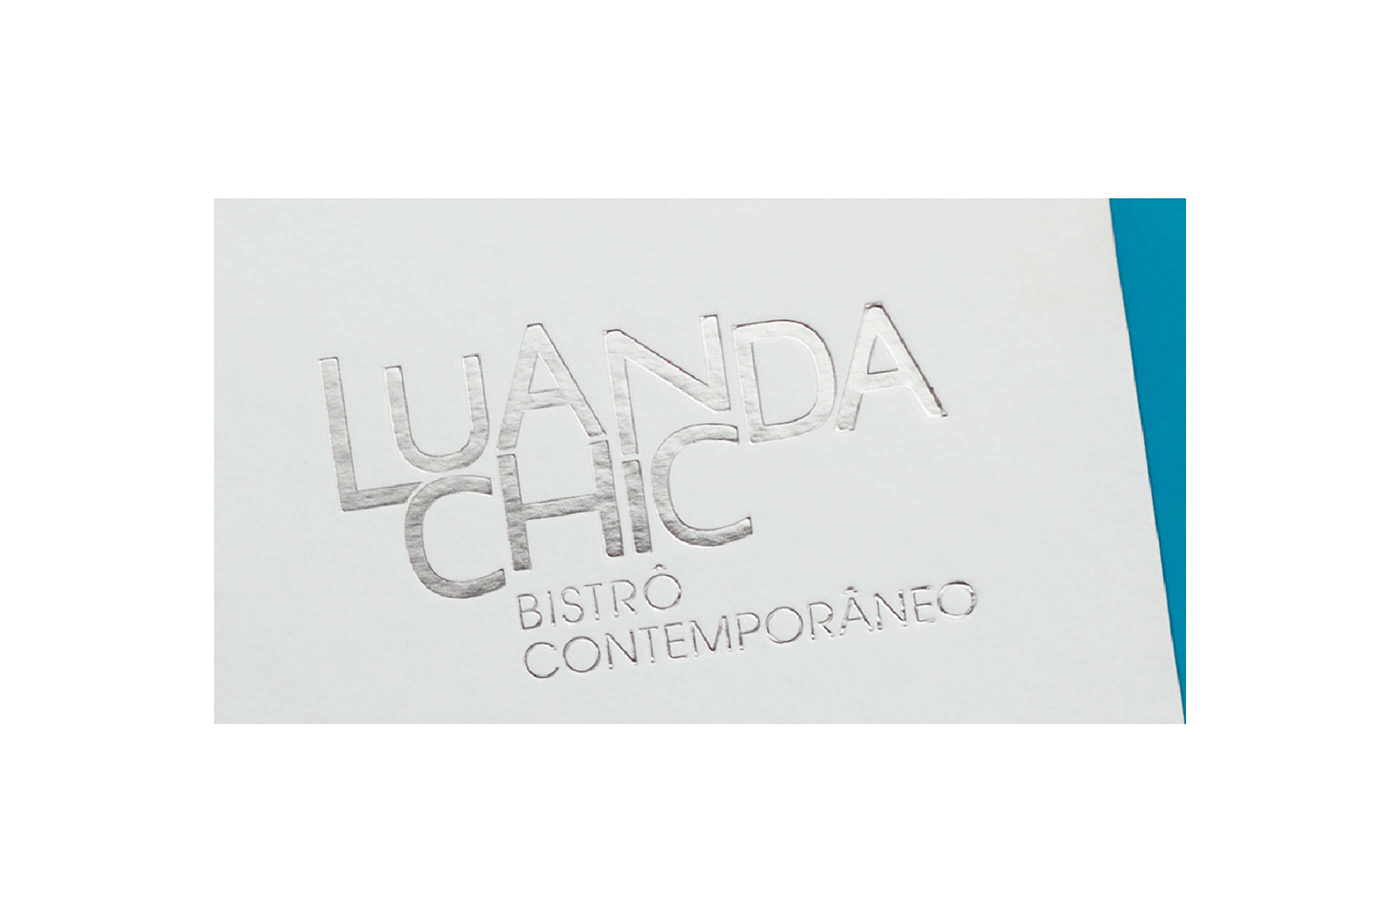 Luanda menu cards set Tropical africa blue yellow concept sophisticated